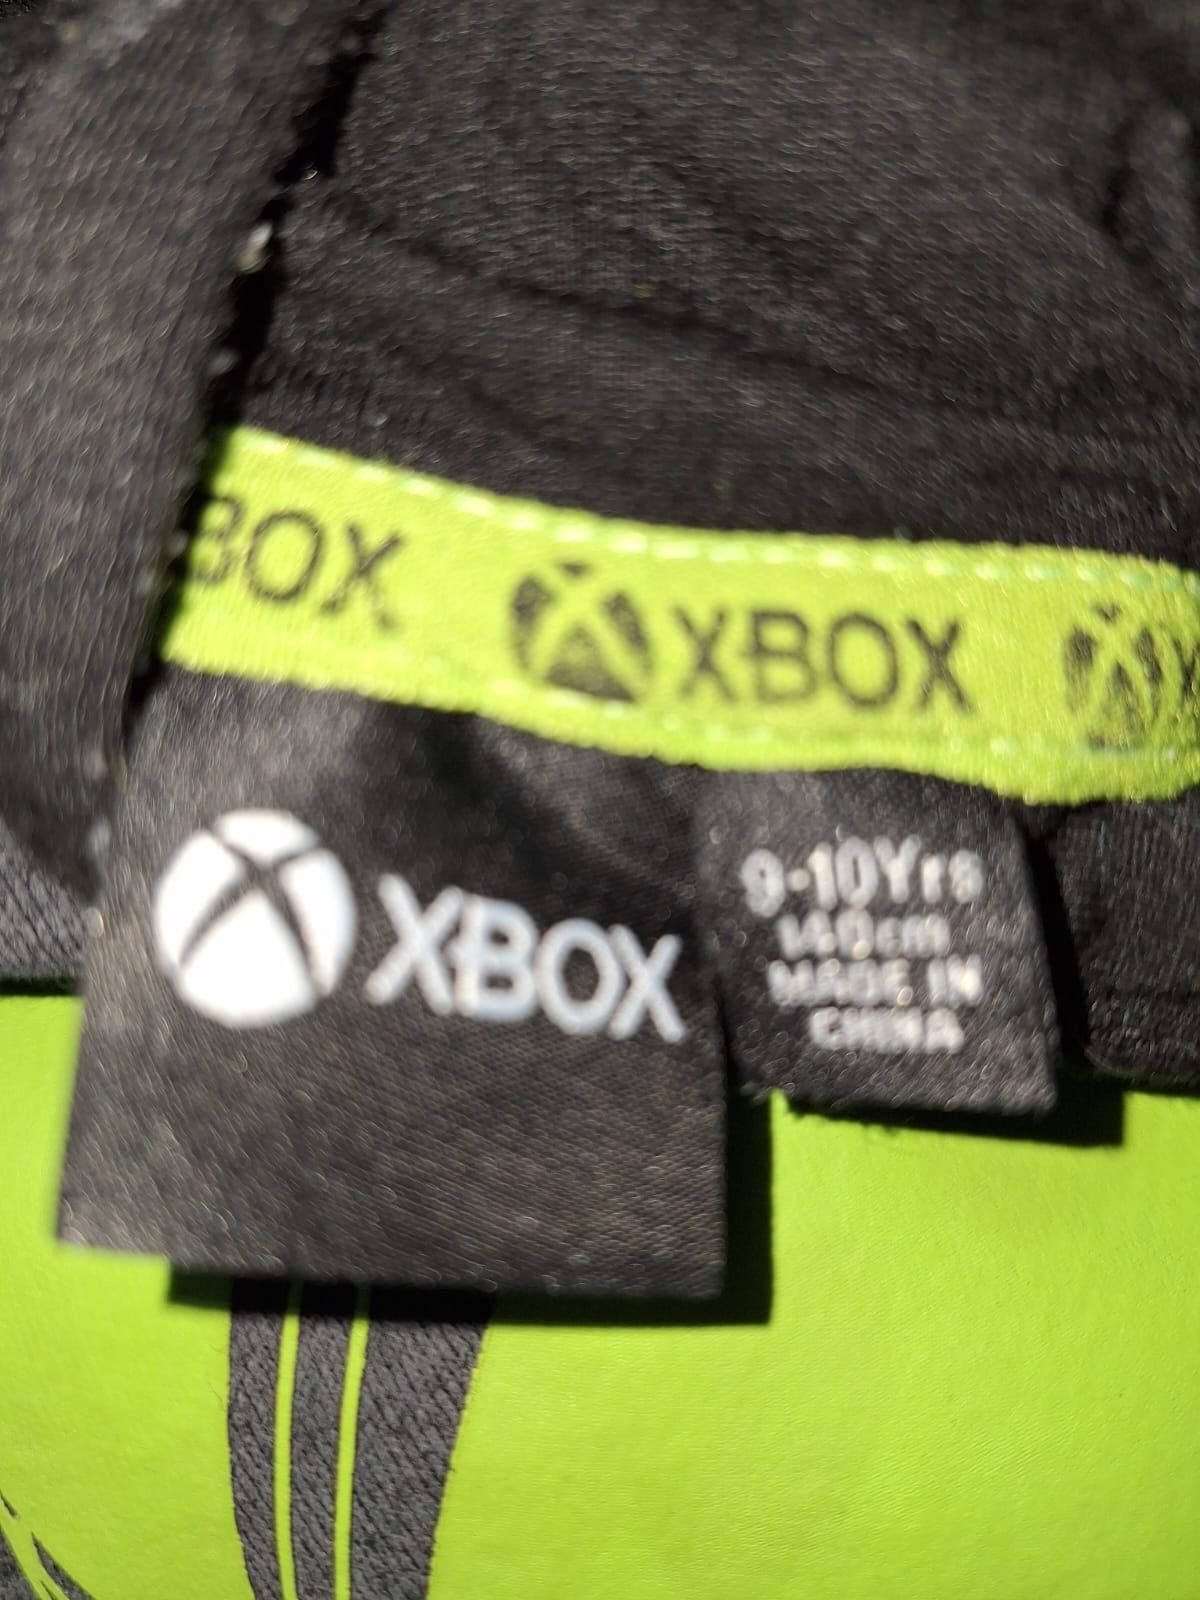 Xbox bluza nasa 140cm zestaw 3 szt.